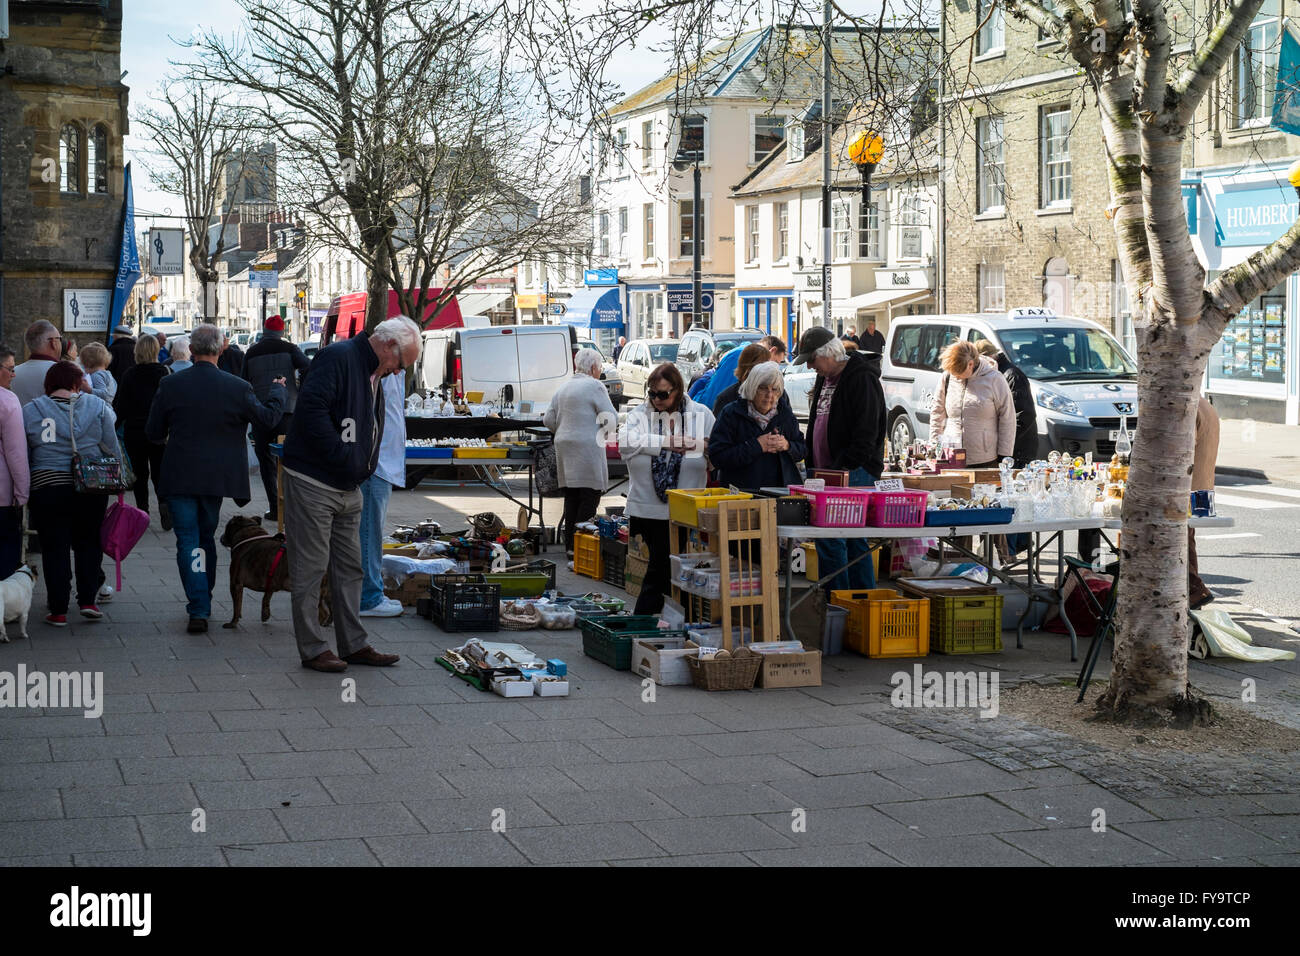 Bridport a small town in Dorset England UK street market Stock Photo